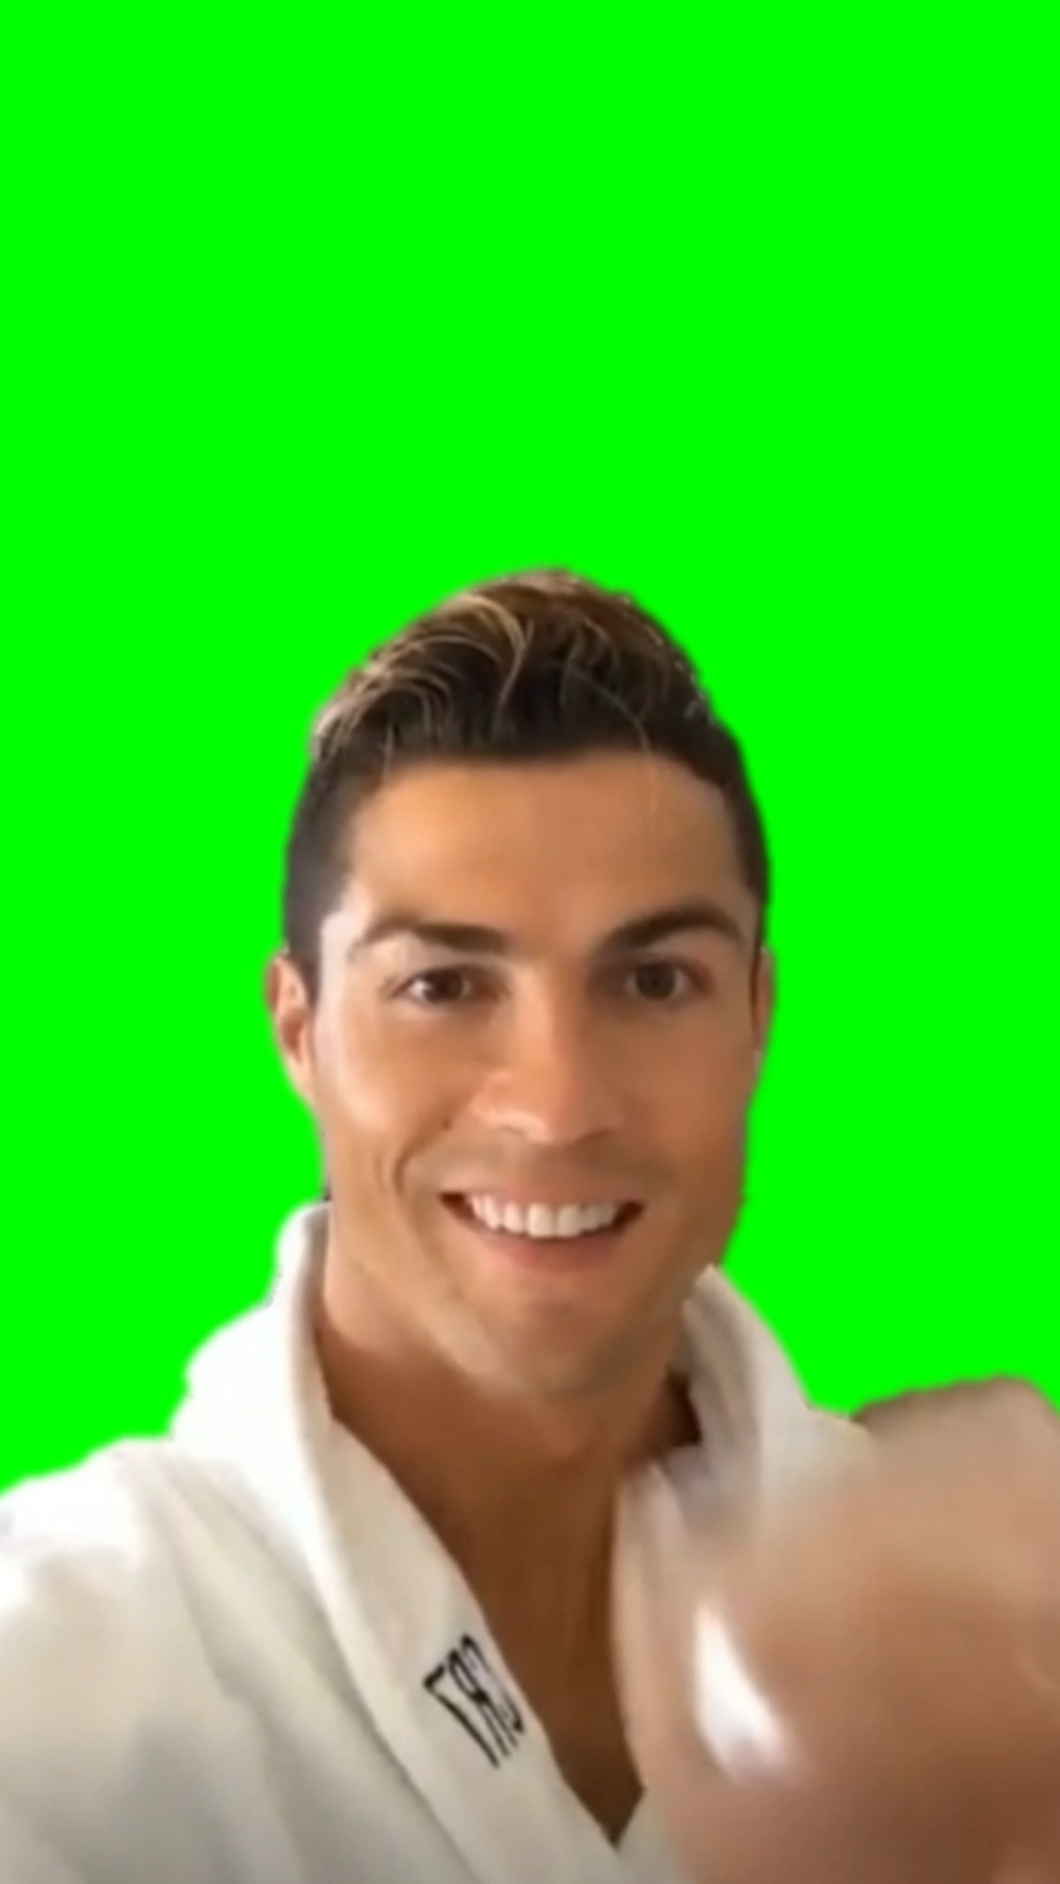 Cristiano Ronaldo Drinking and Smiling Meme (Green Screen)